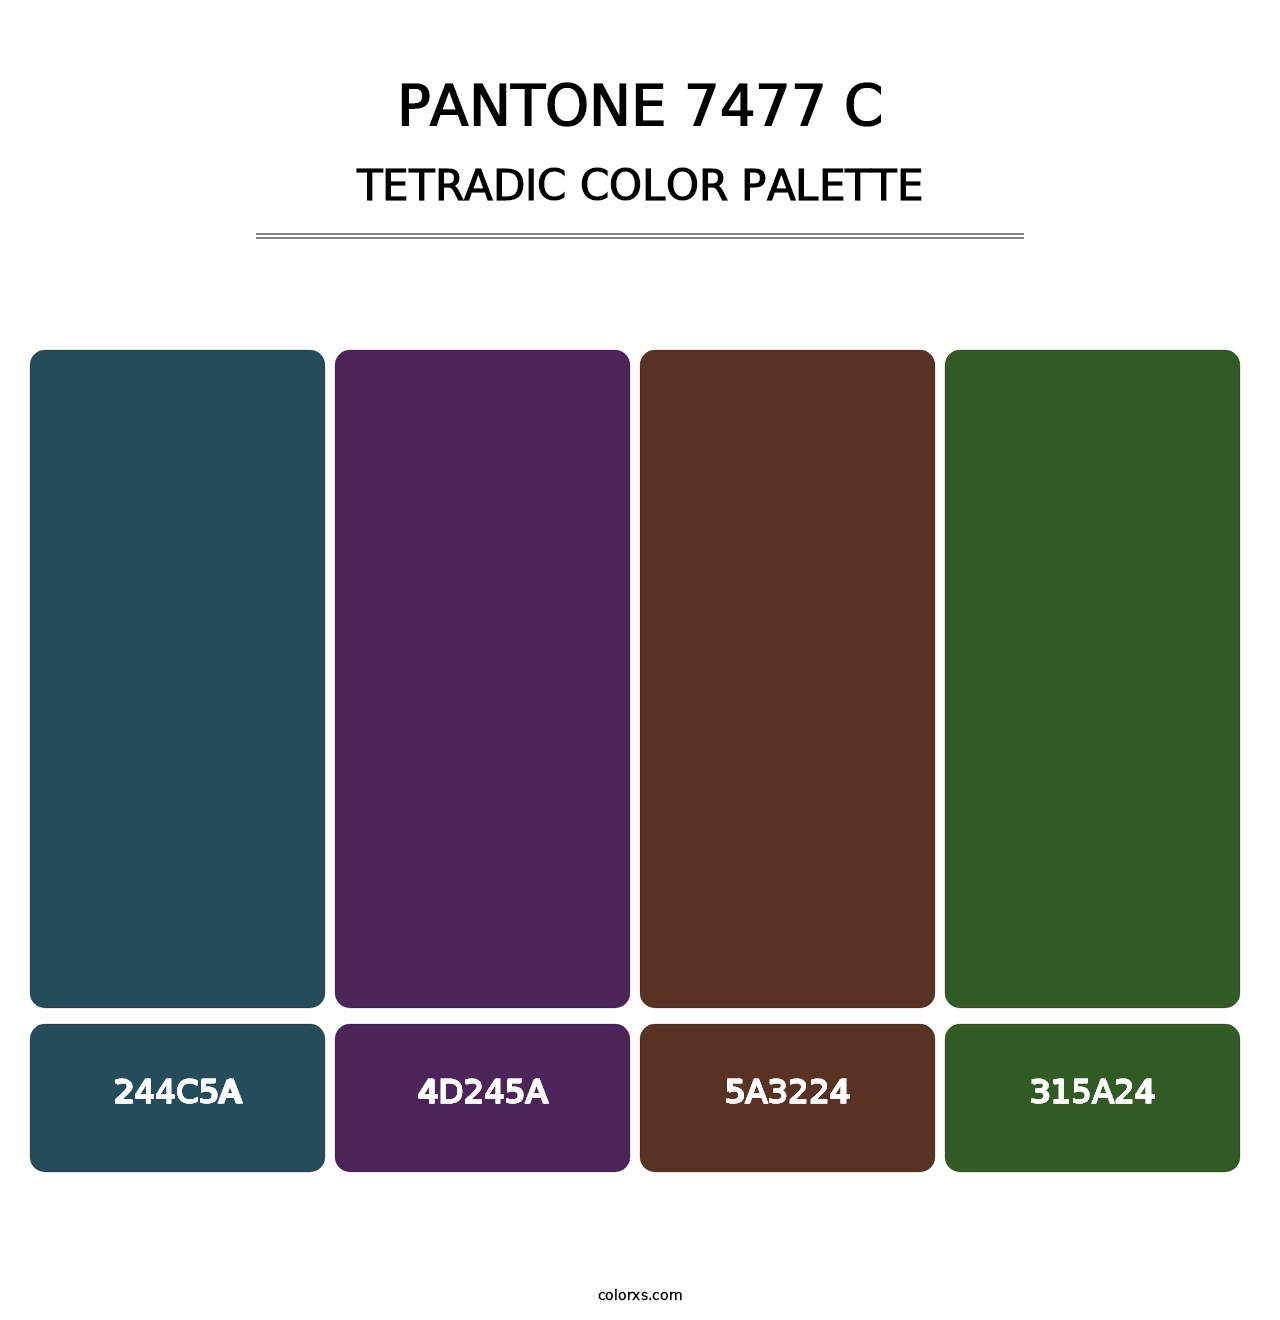 PANTONE 7477 C - Tetradic Color Palette